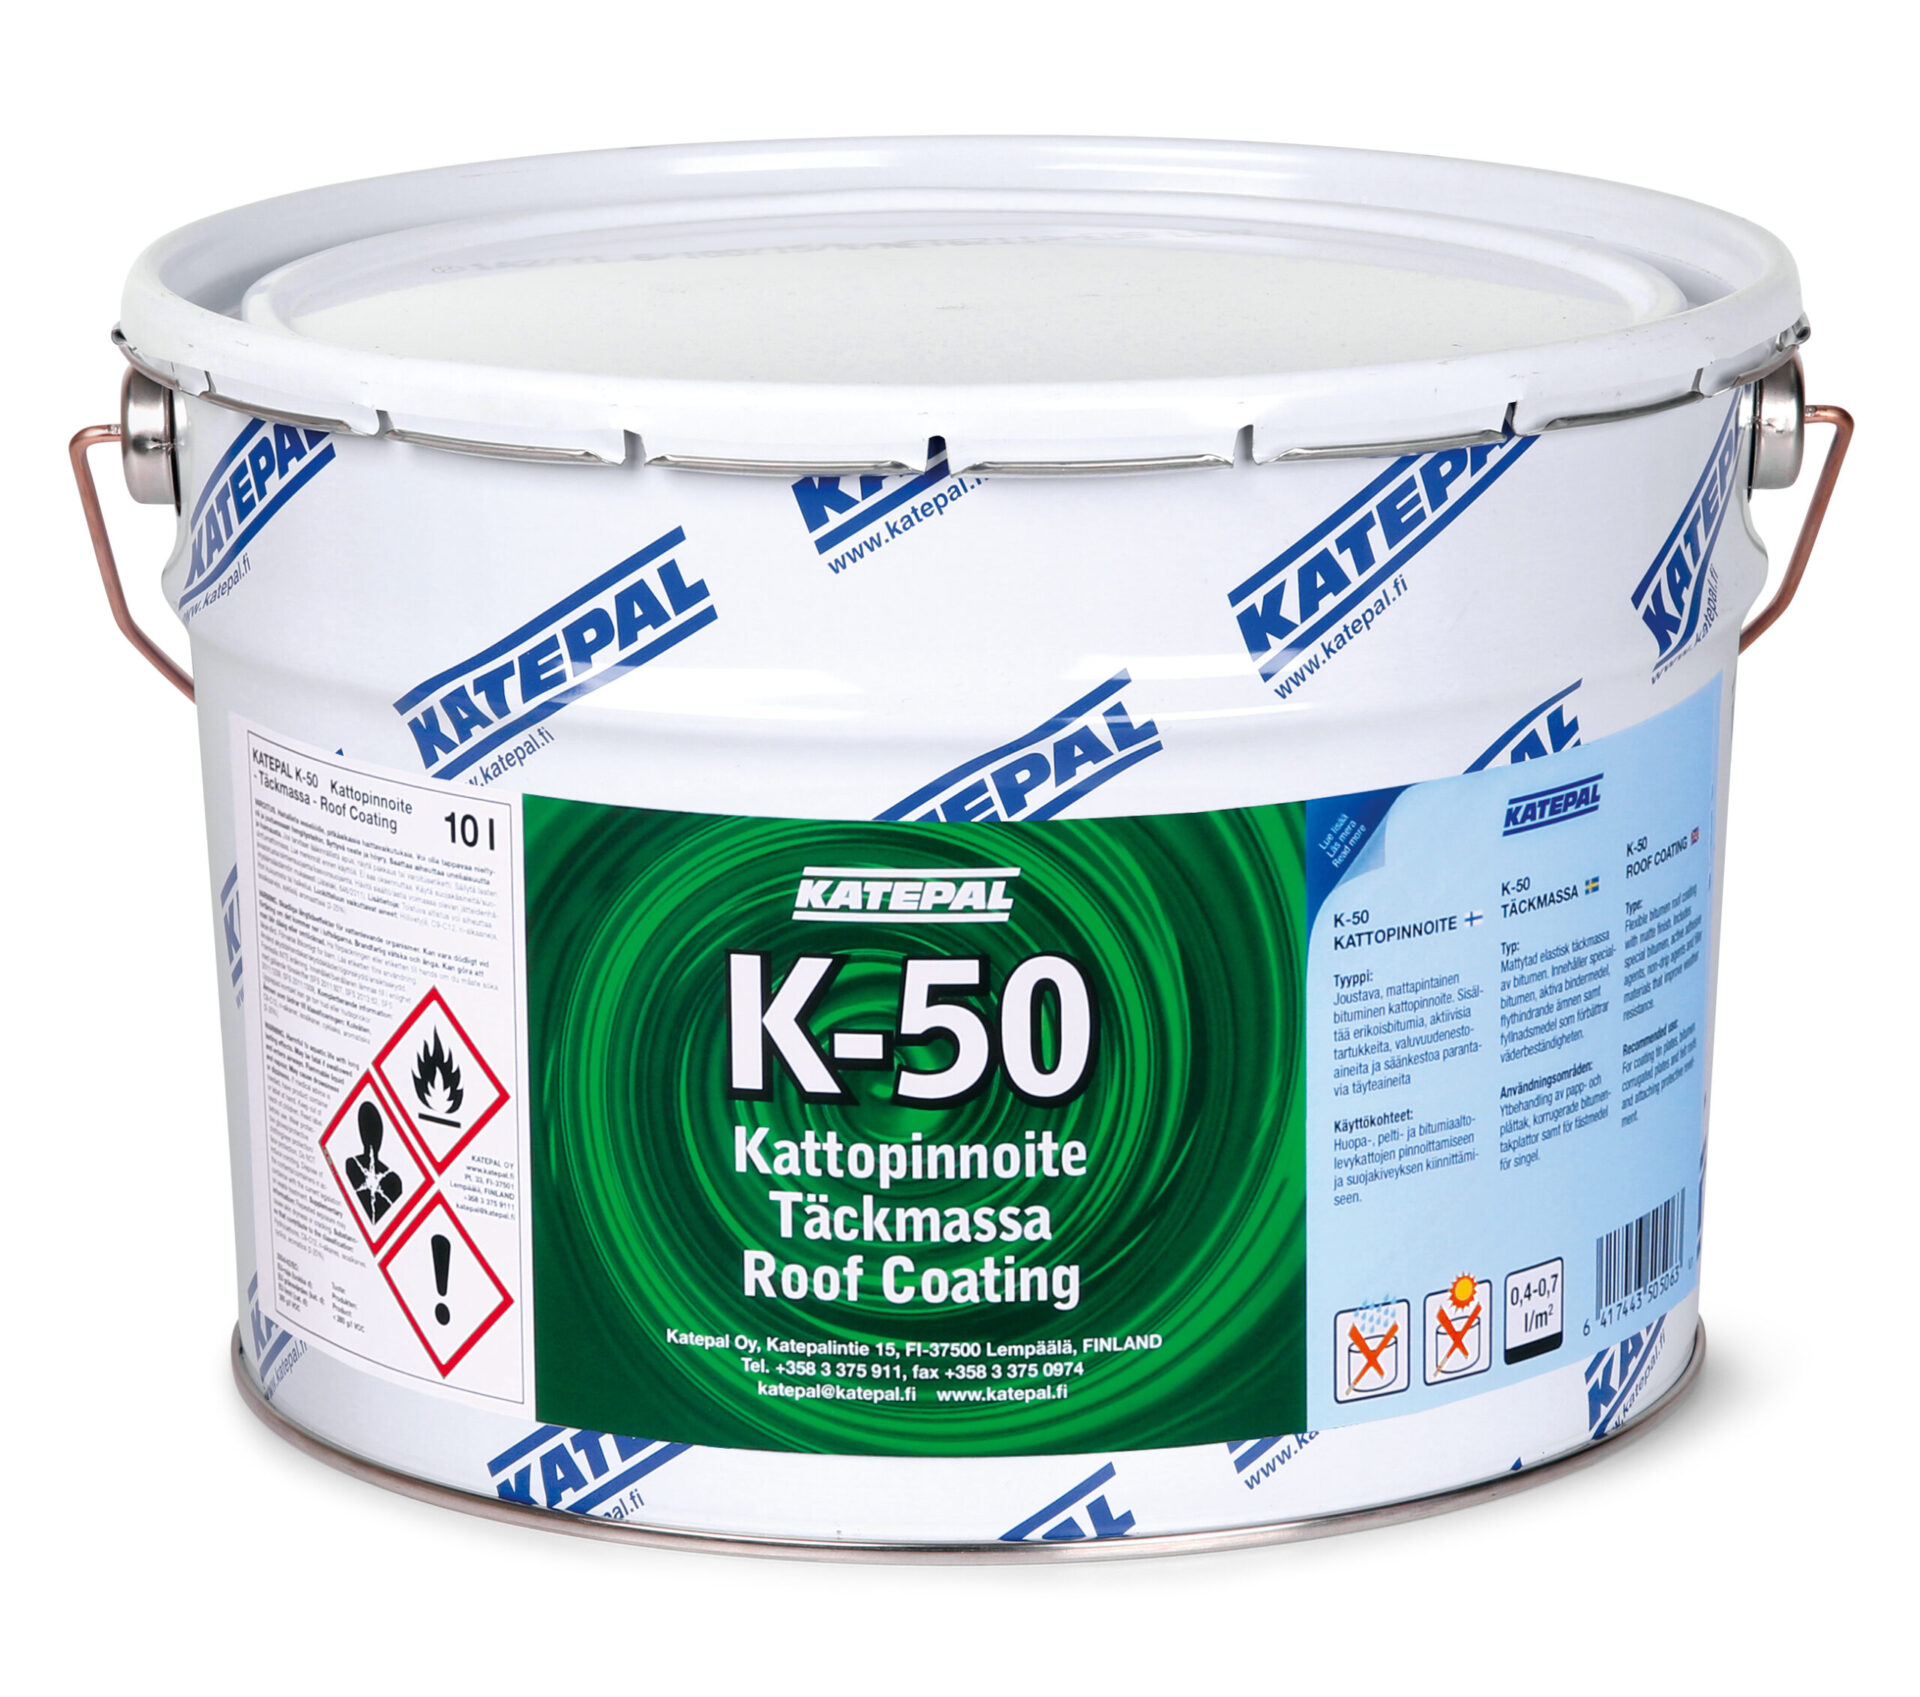 Roof coating K-50